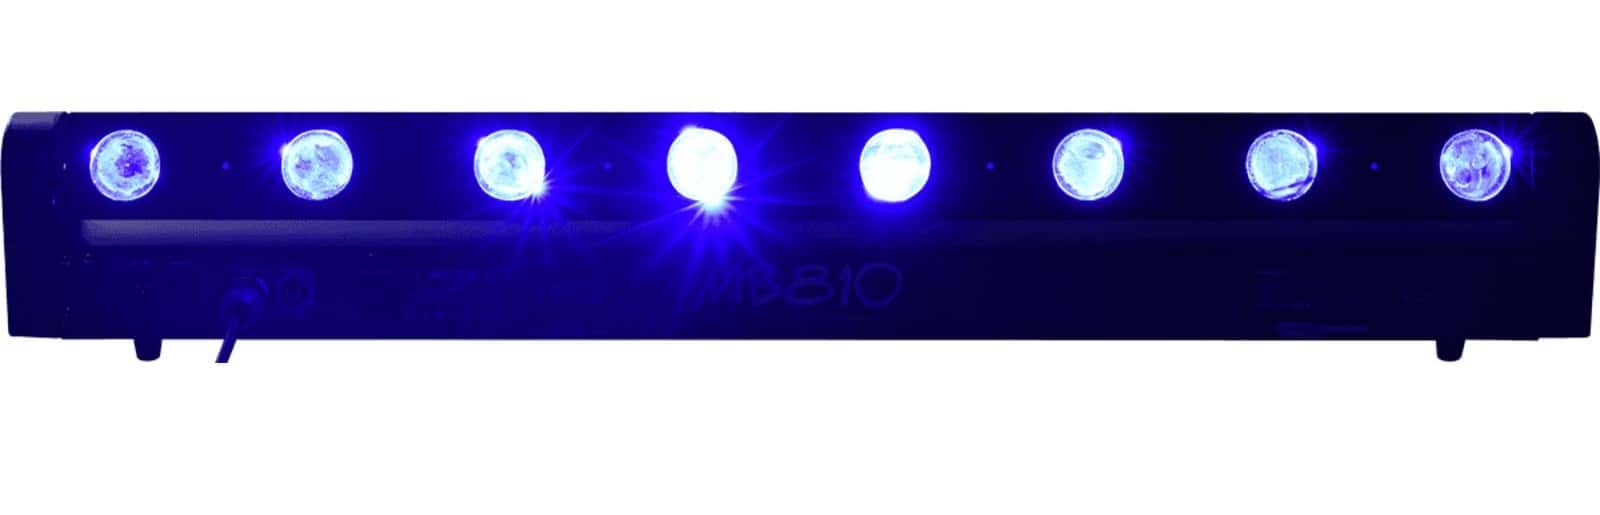 ALGAM LIGHTING MB 810 - BARRA LED MOTORIZADA 8 RGBW